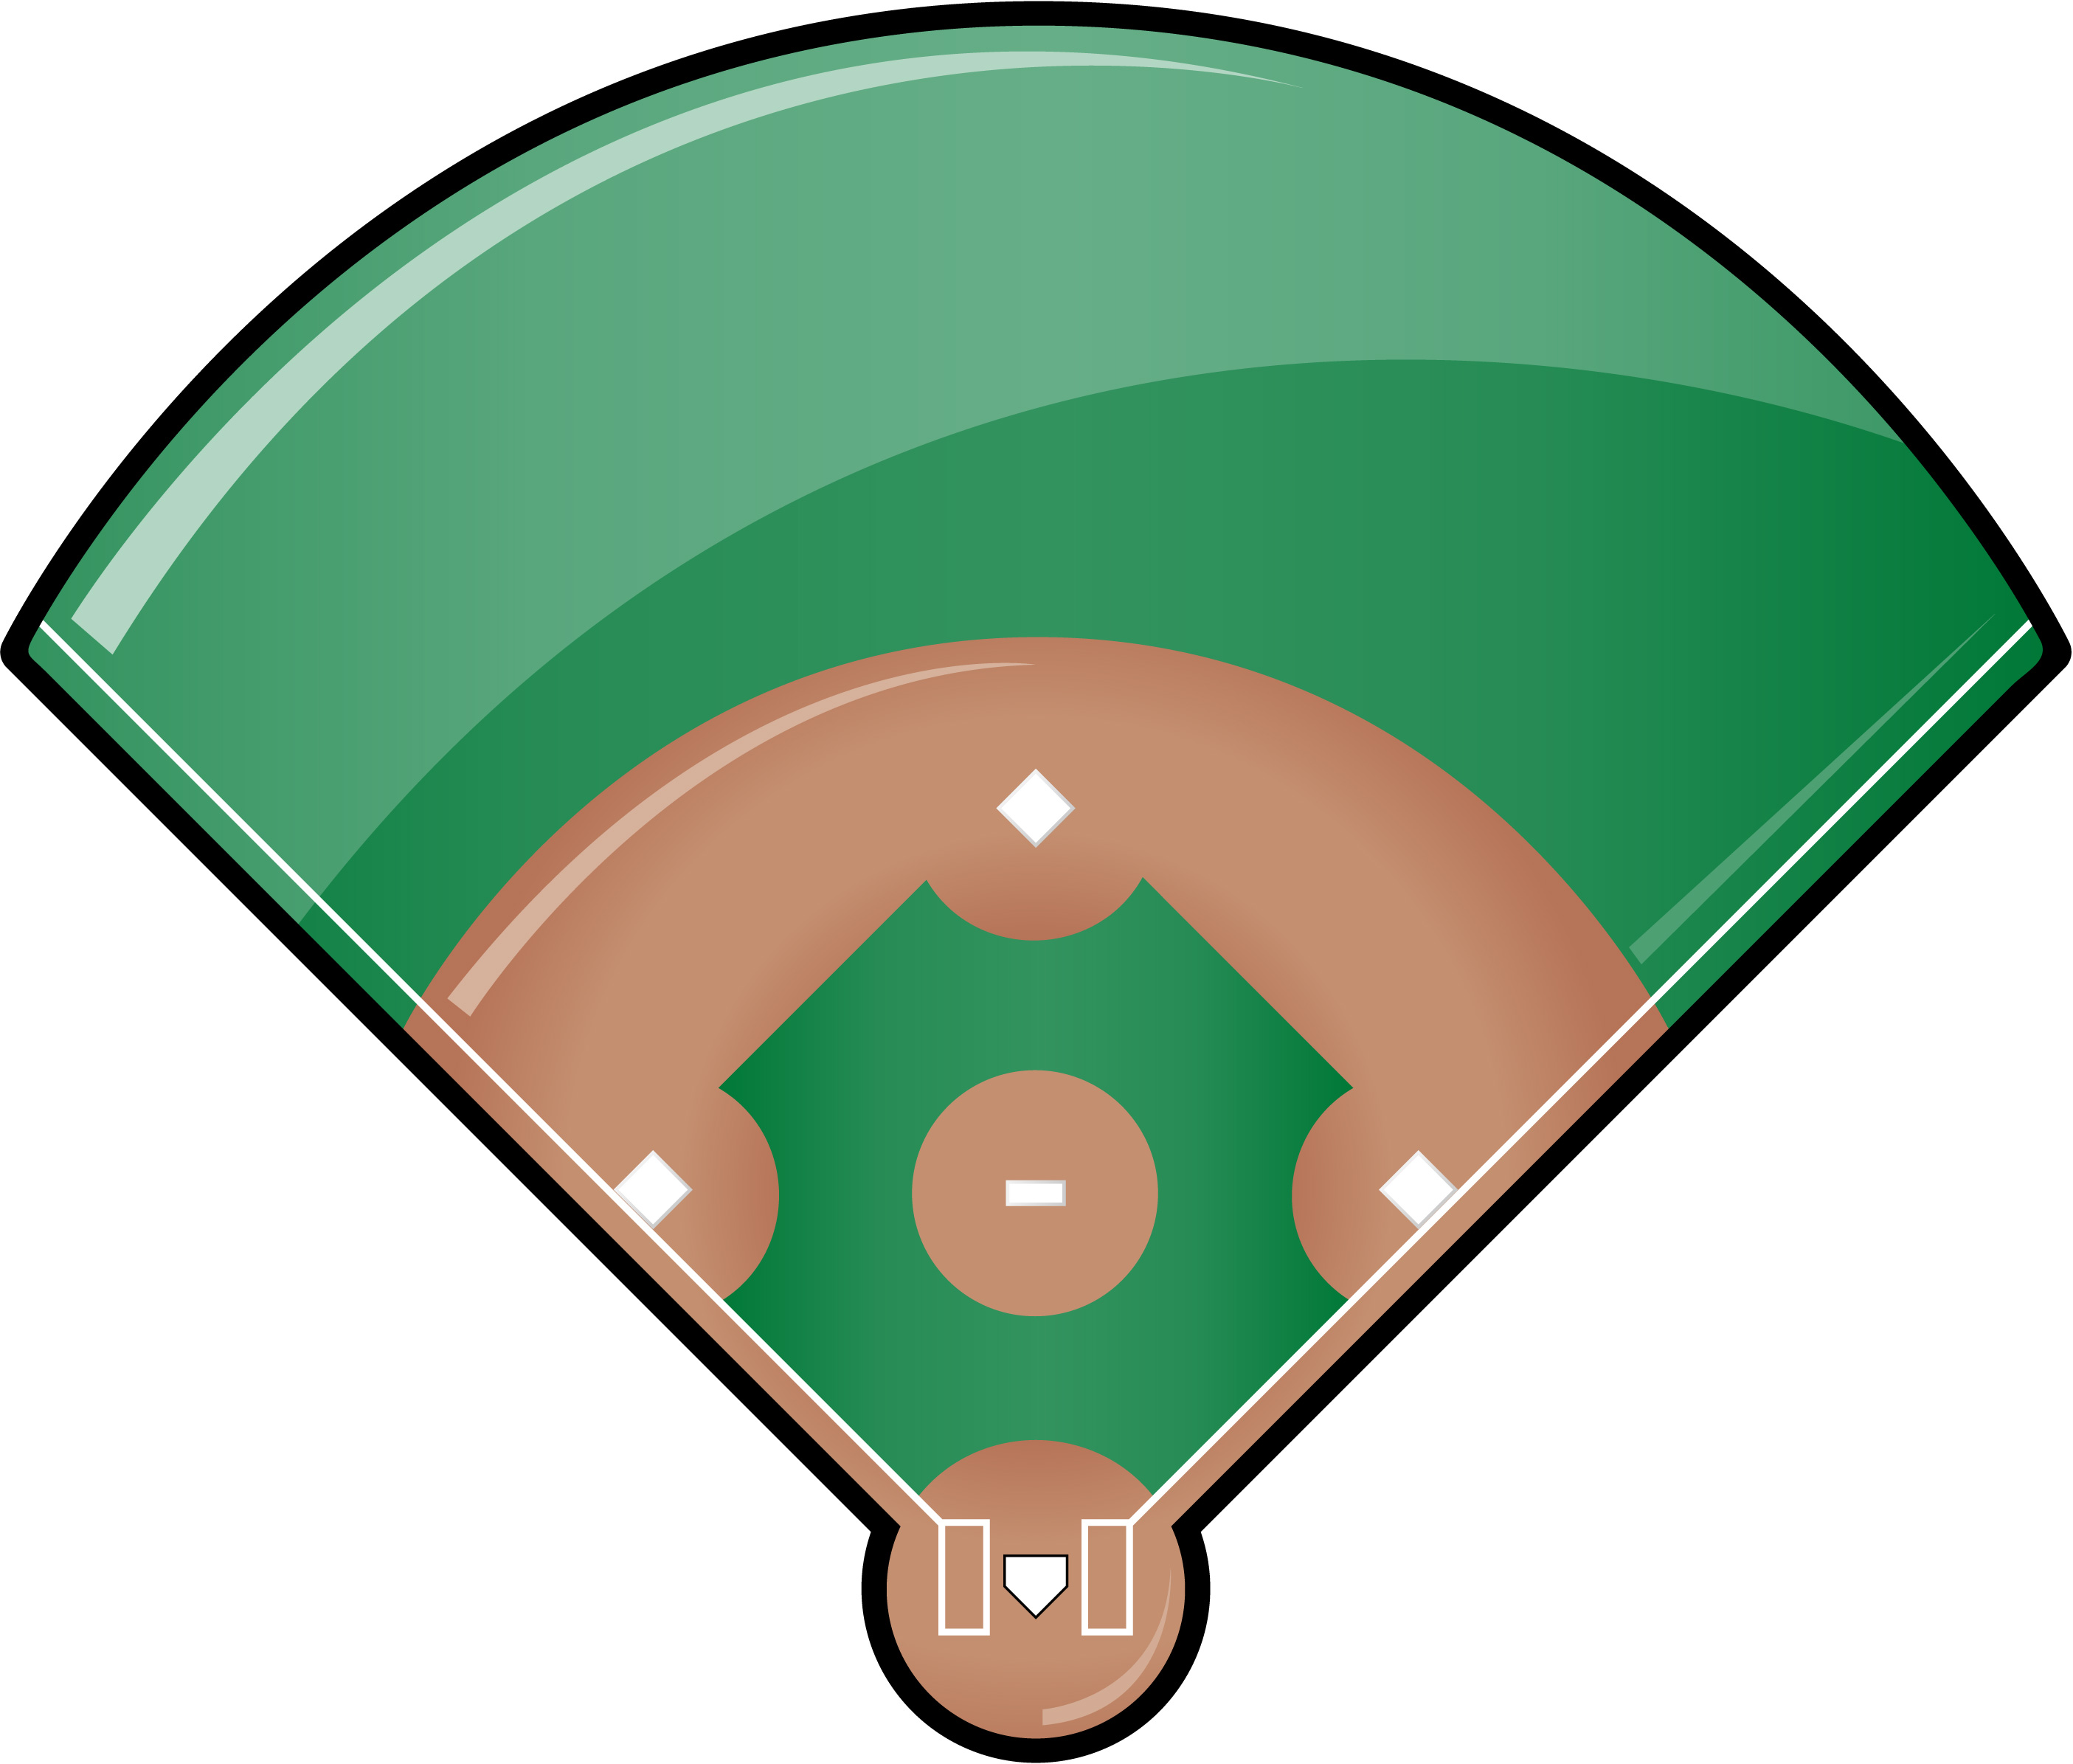 Baseball diamond baseball field clipart free images.